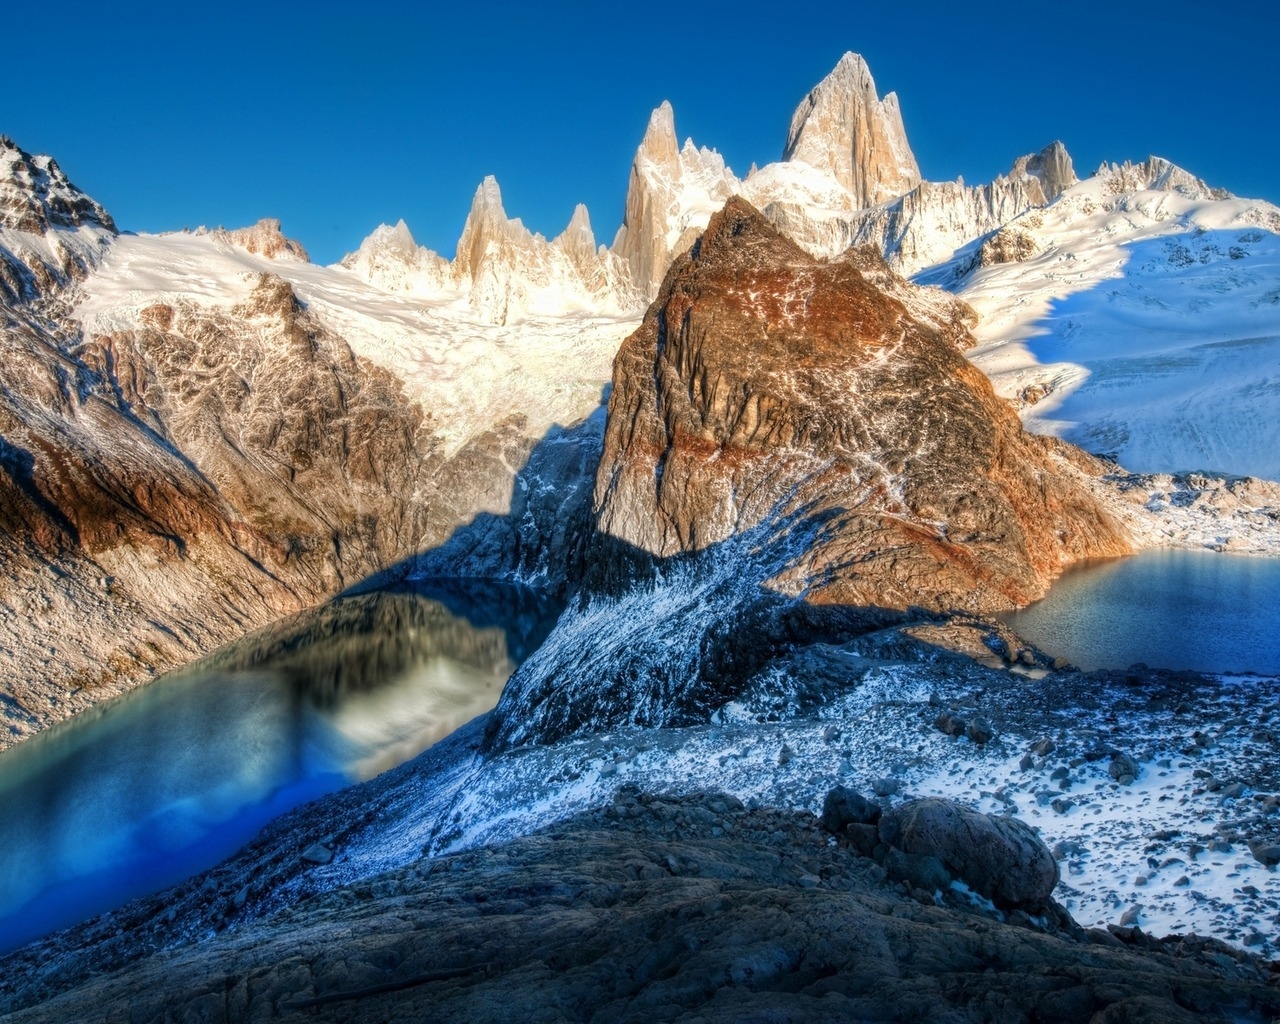 Mountain Rocks Landscape for 1280 x 1024 resolution